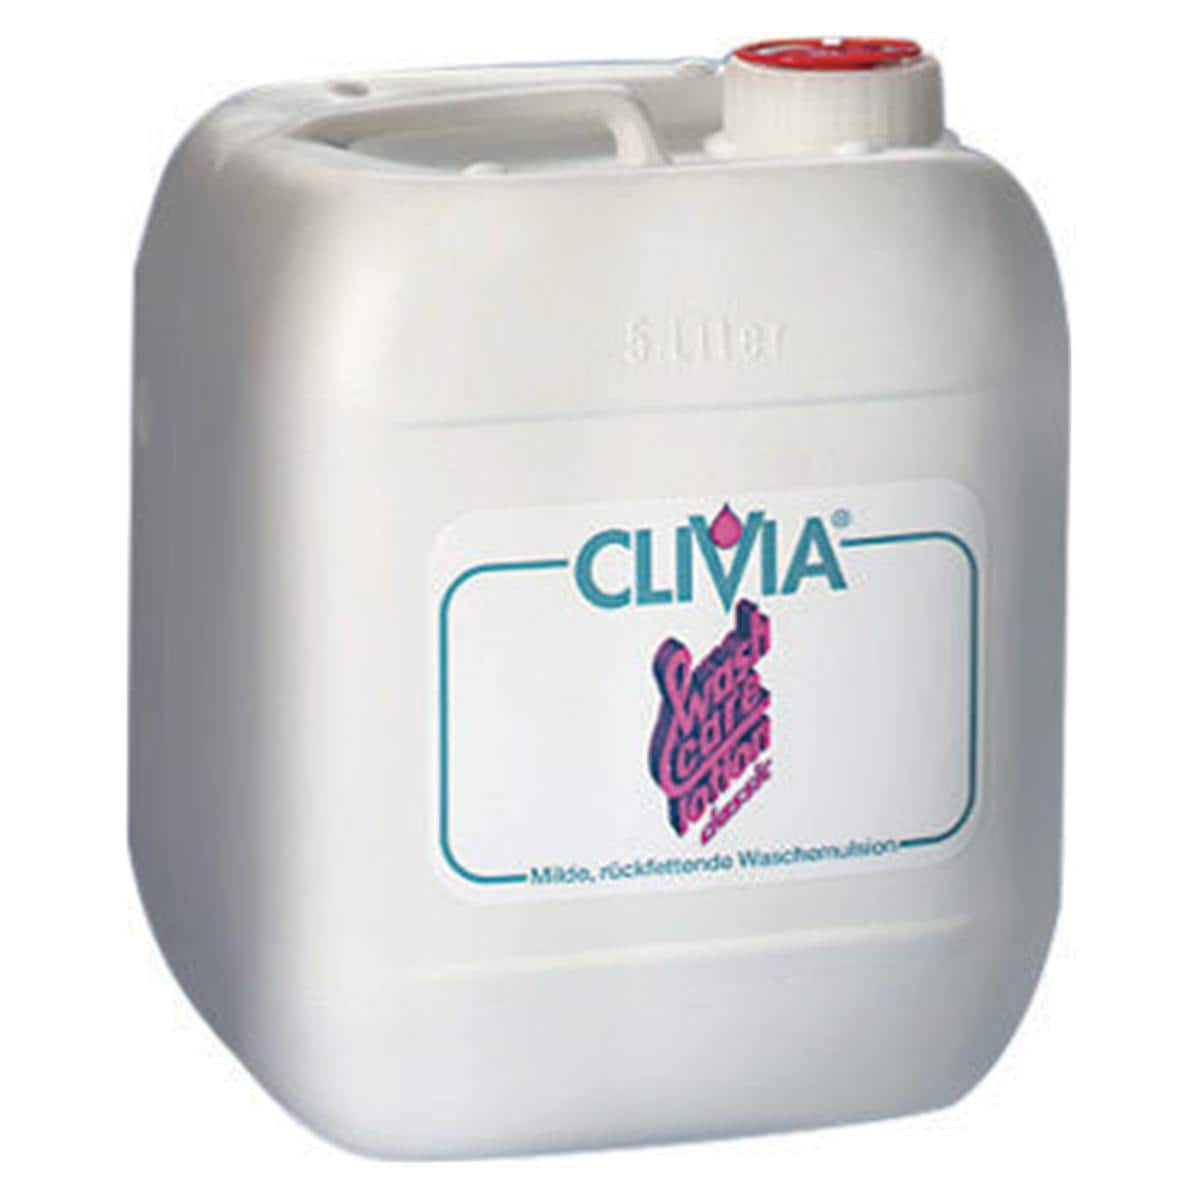 CLIVIA® classic Seife - Kanister 5 Liter